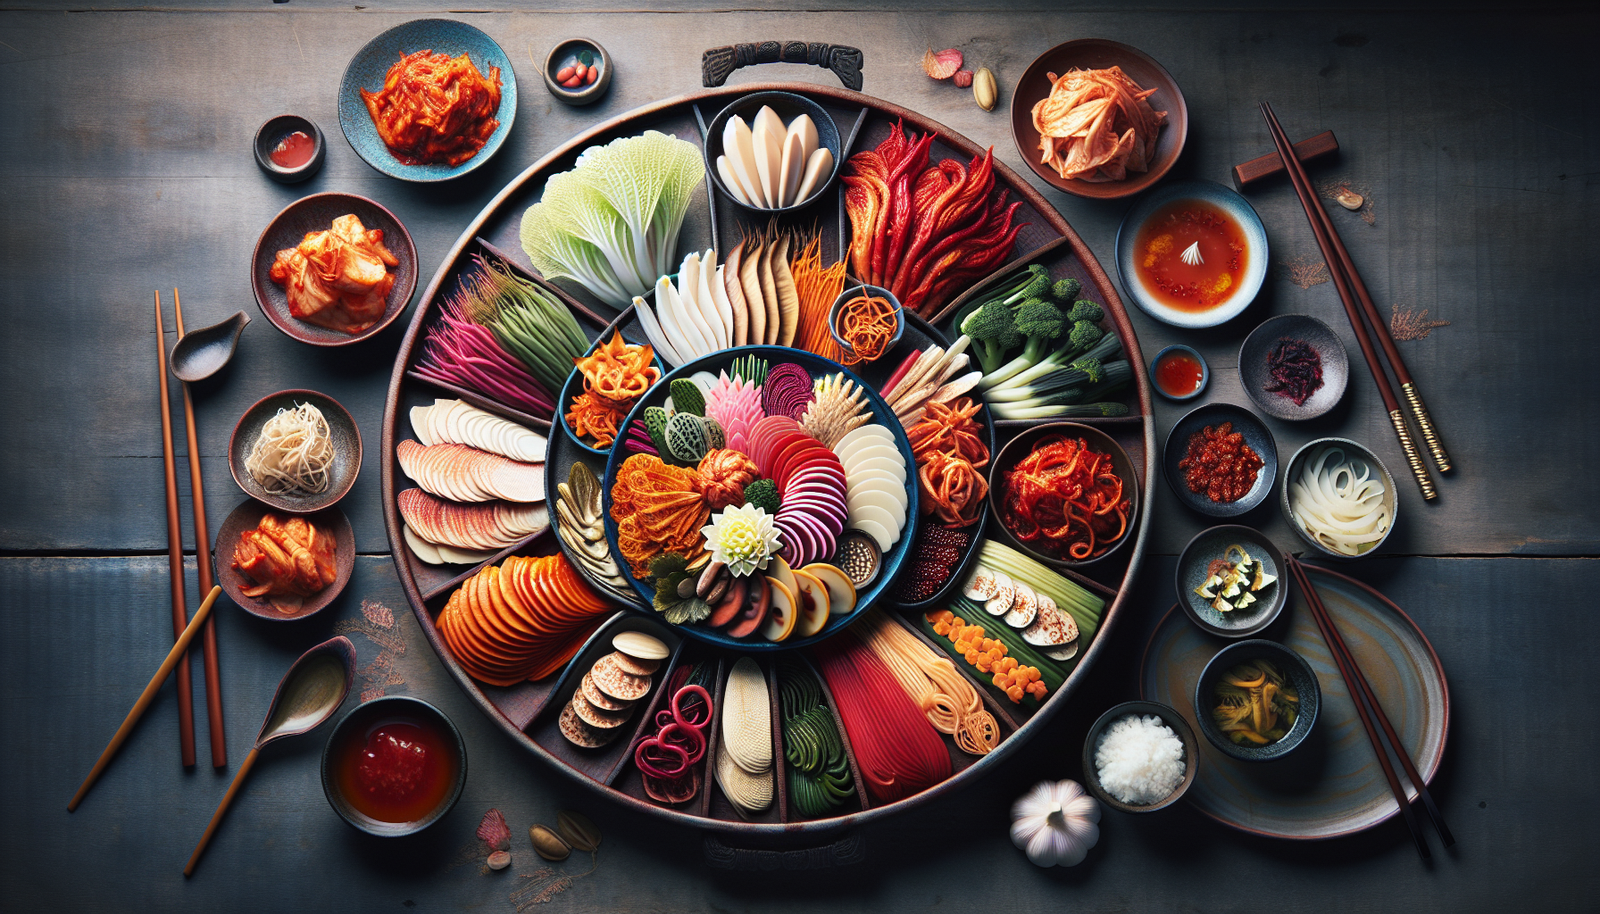 Can You Explain The Art Of Presentation In Korean Cuisine?